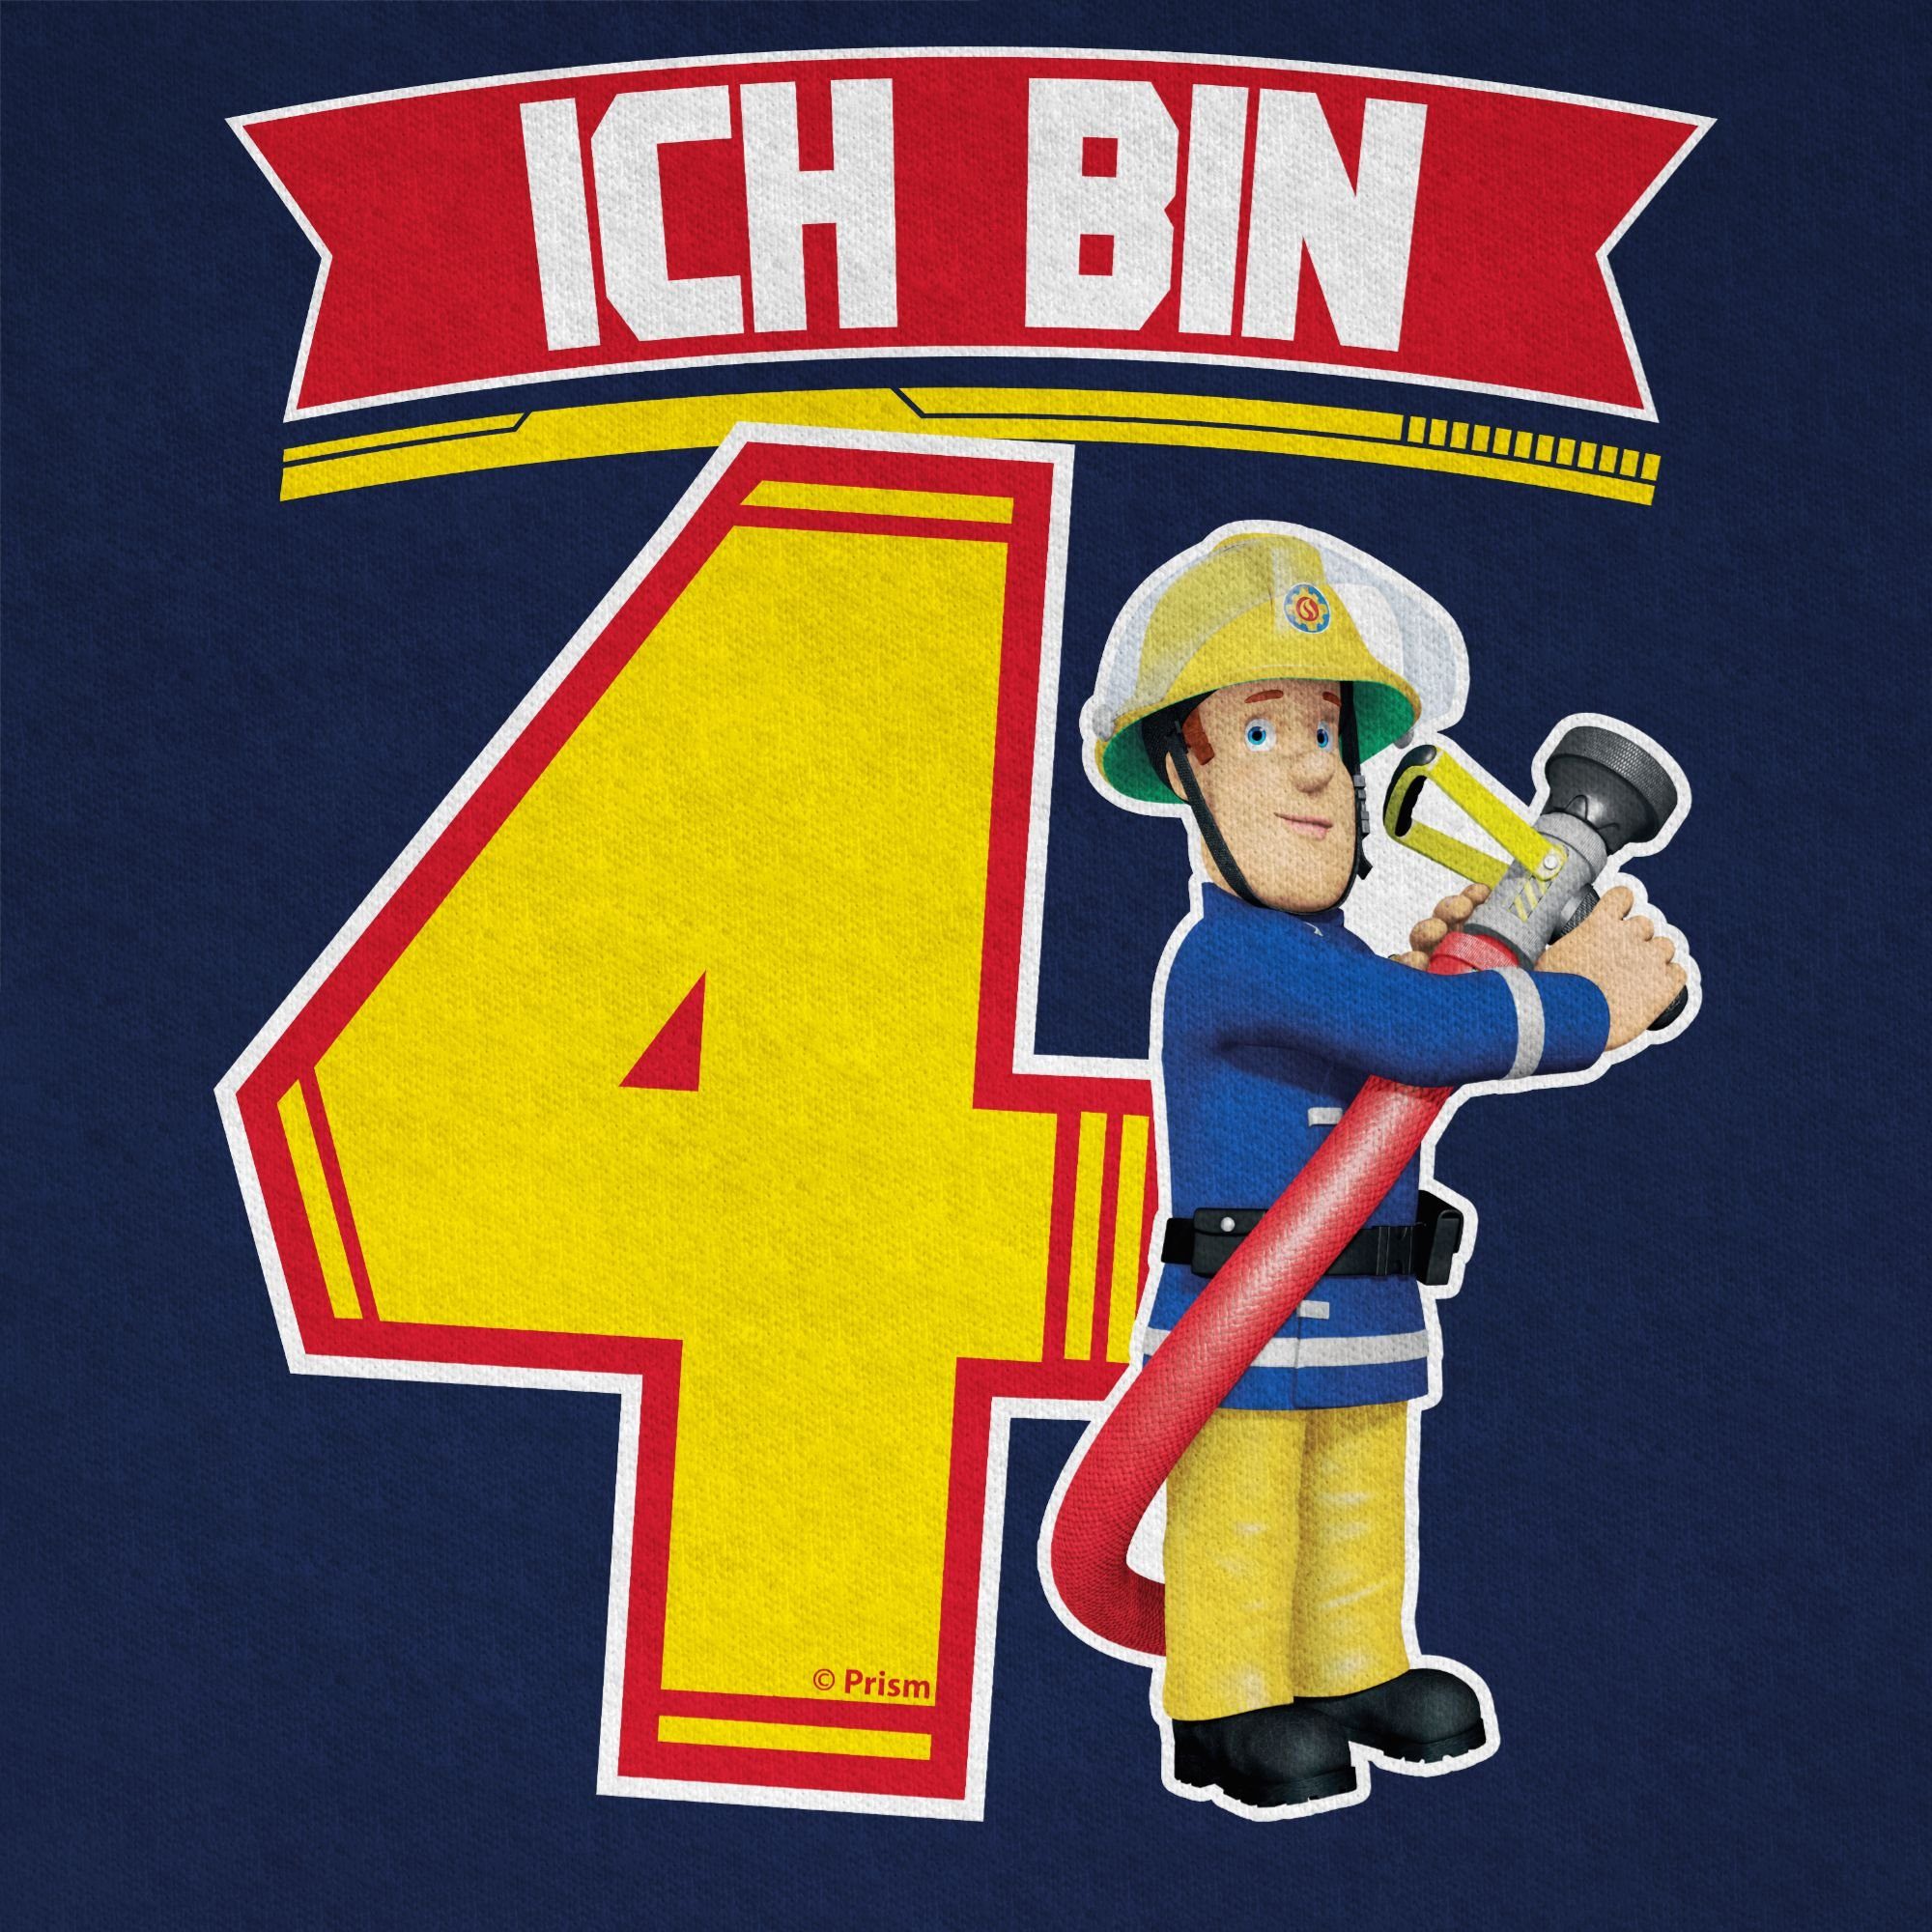 Shirtracer T-Shirt bin - Ich Dunkelblau Feuerwehrmann Sam Jungen 02 4 Sam